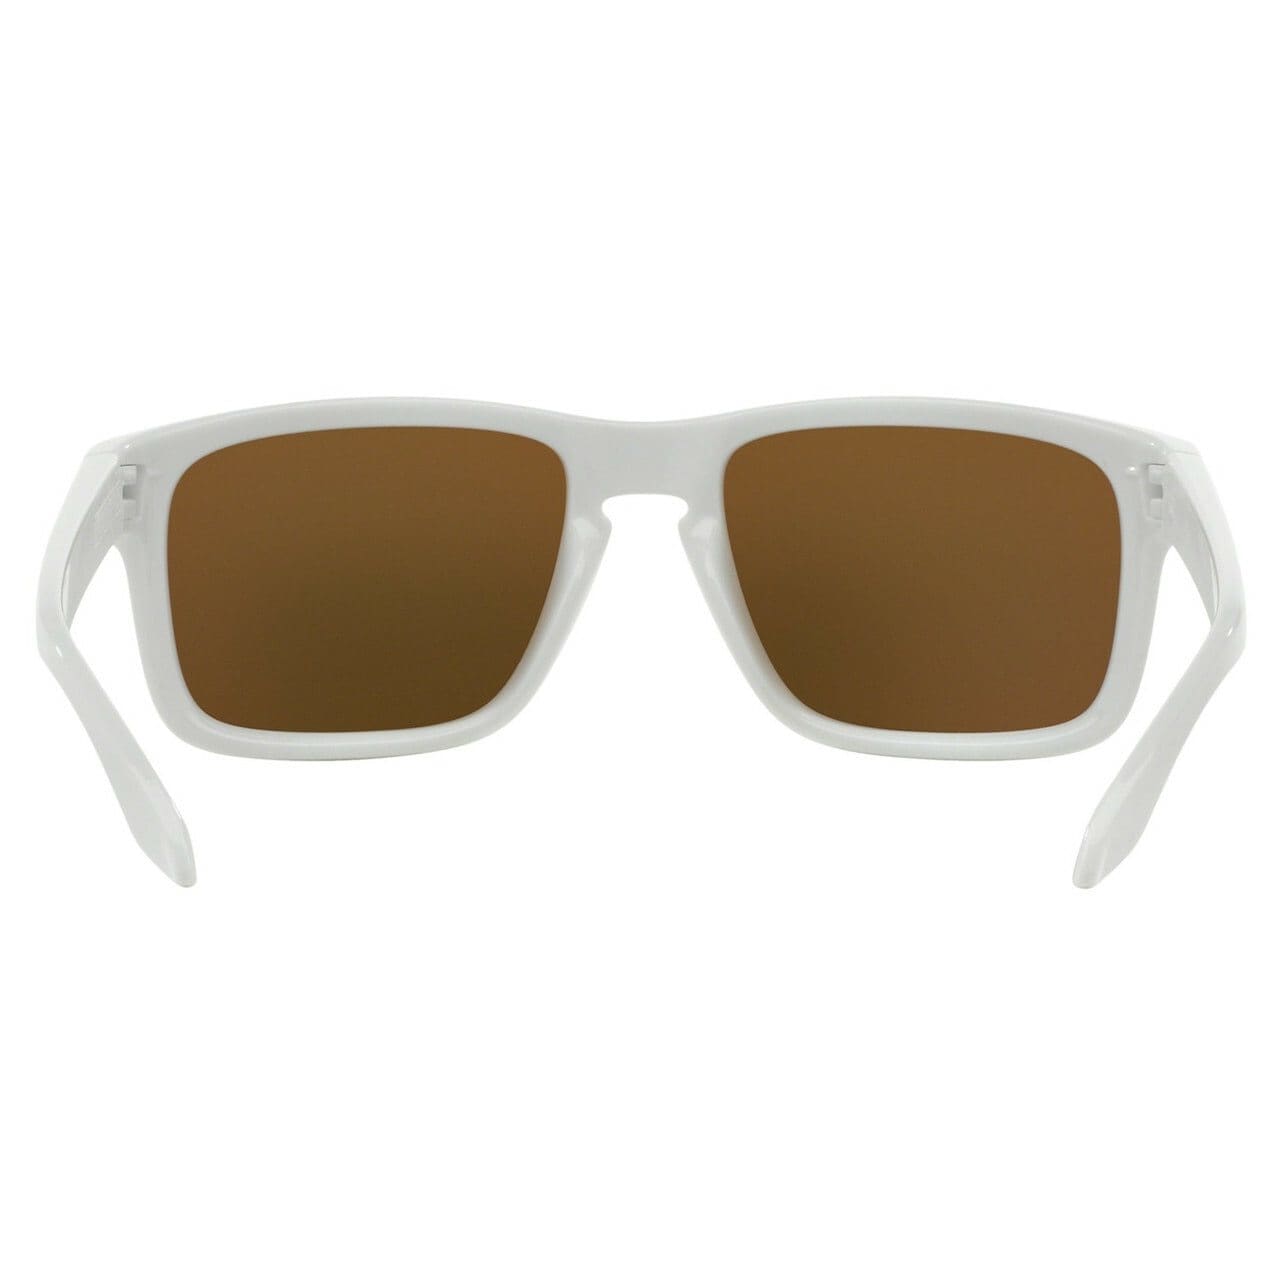 Oakley Holbrook OO9244-14 Polished White Frame 24k Iridium Lens Sunglasses - Asia Fit